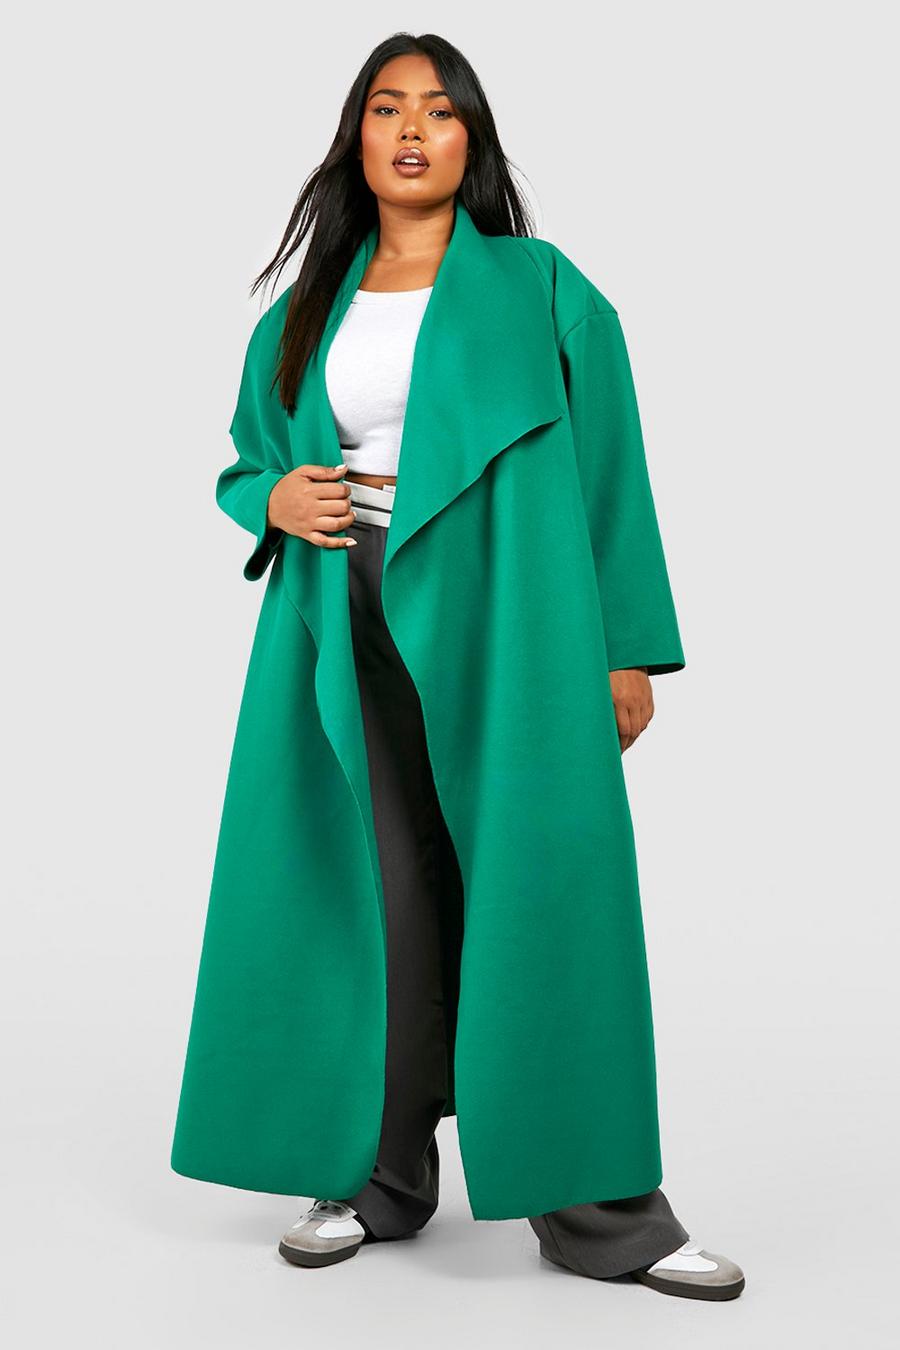 Plus Size Women's Coats & Outerwear